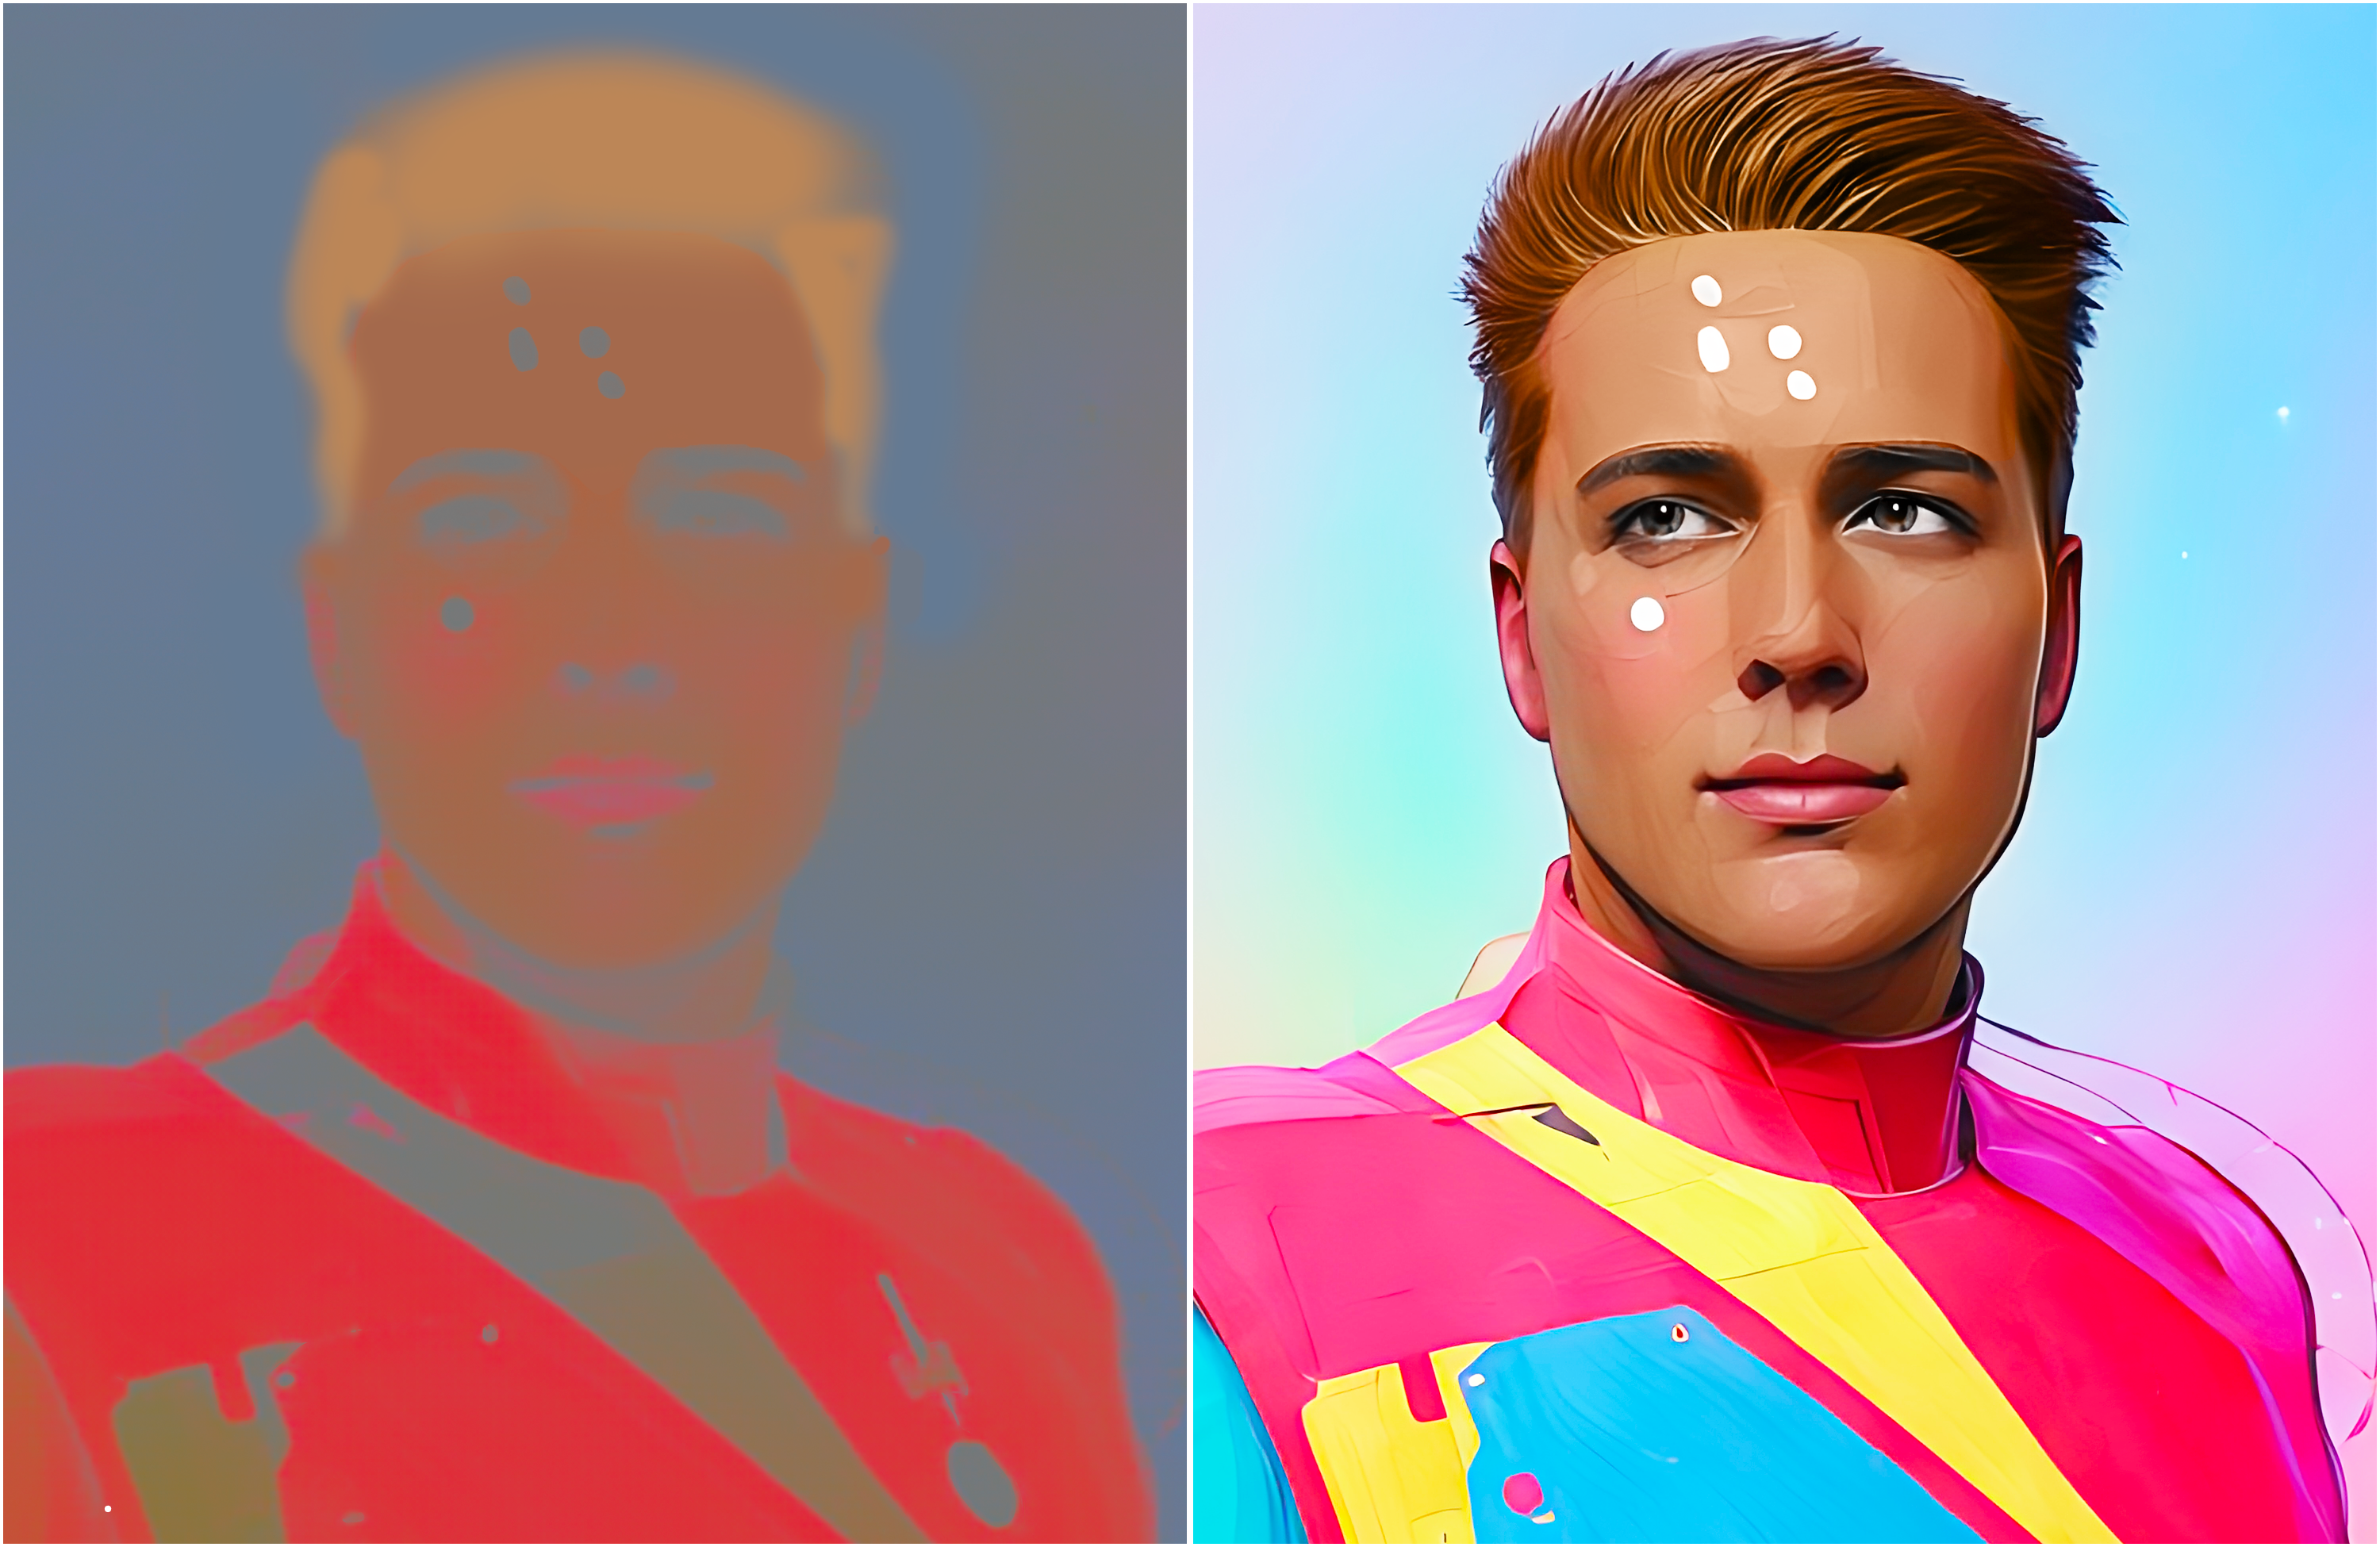 The colorized version of the AI portrait